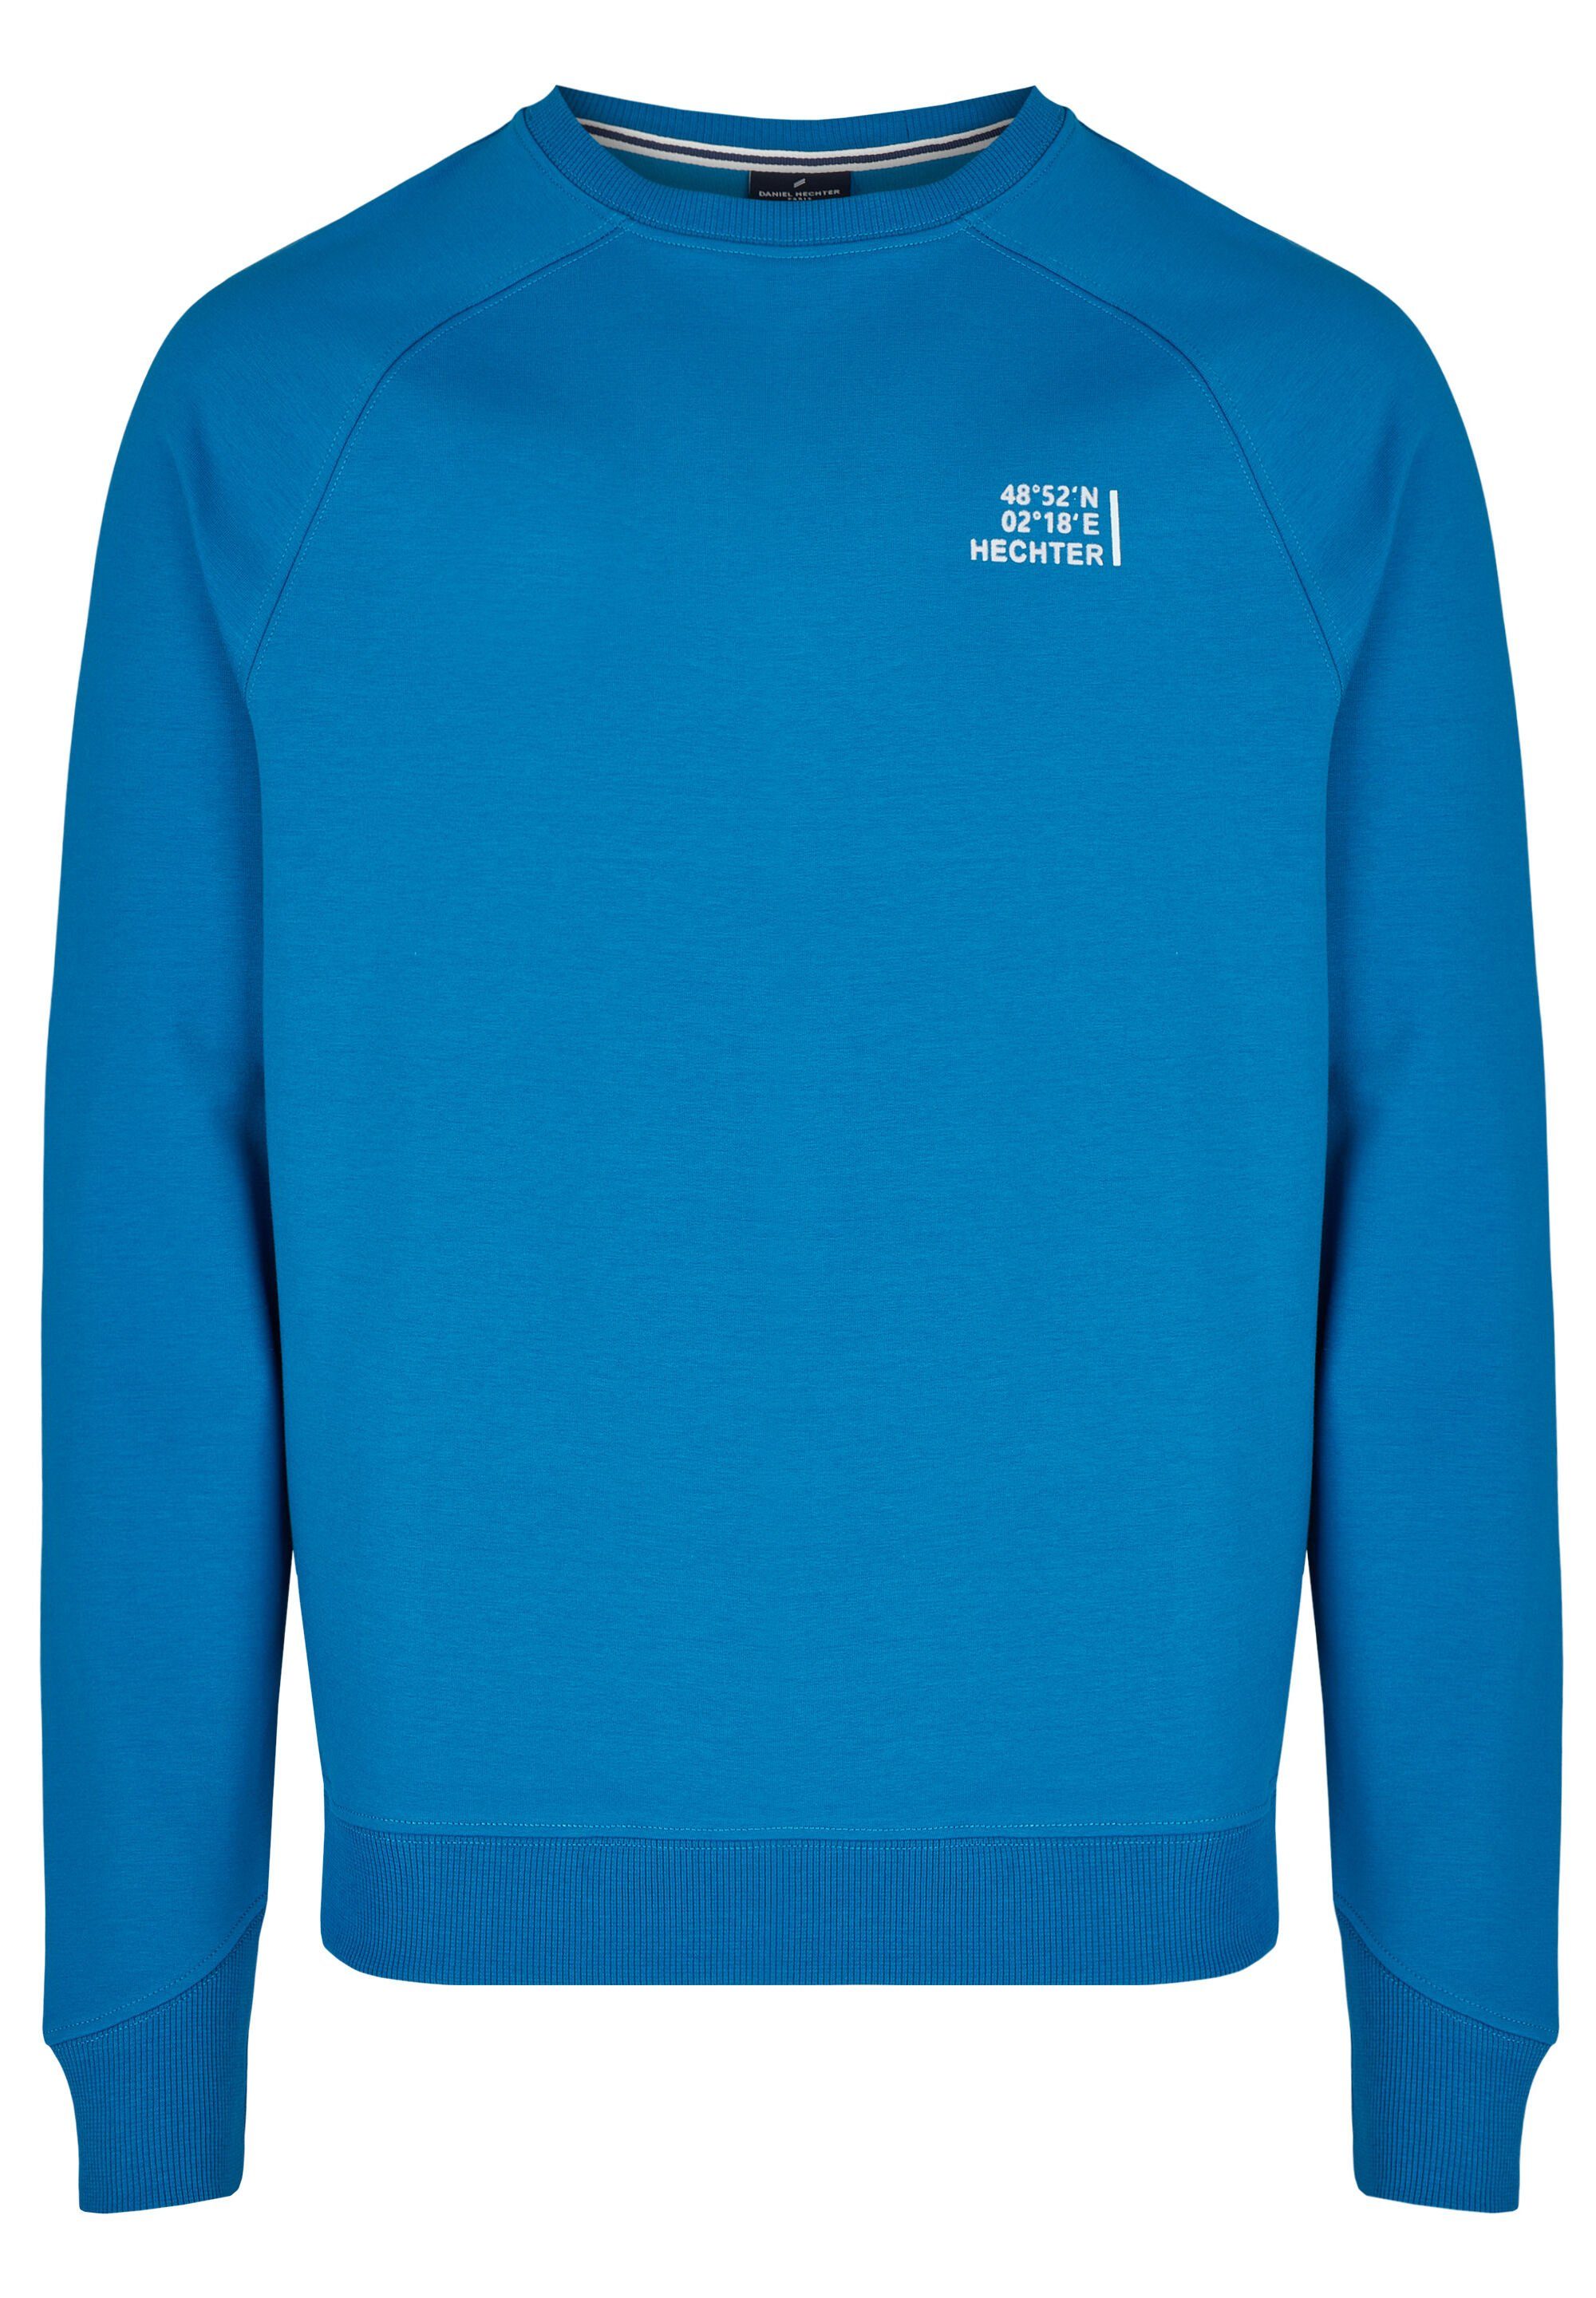 HECHTER PARIS Sweatshirt Sweatshirt Sportive Rippbündchen deep water